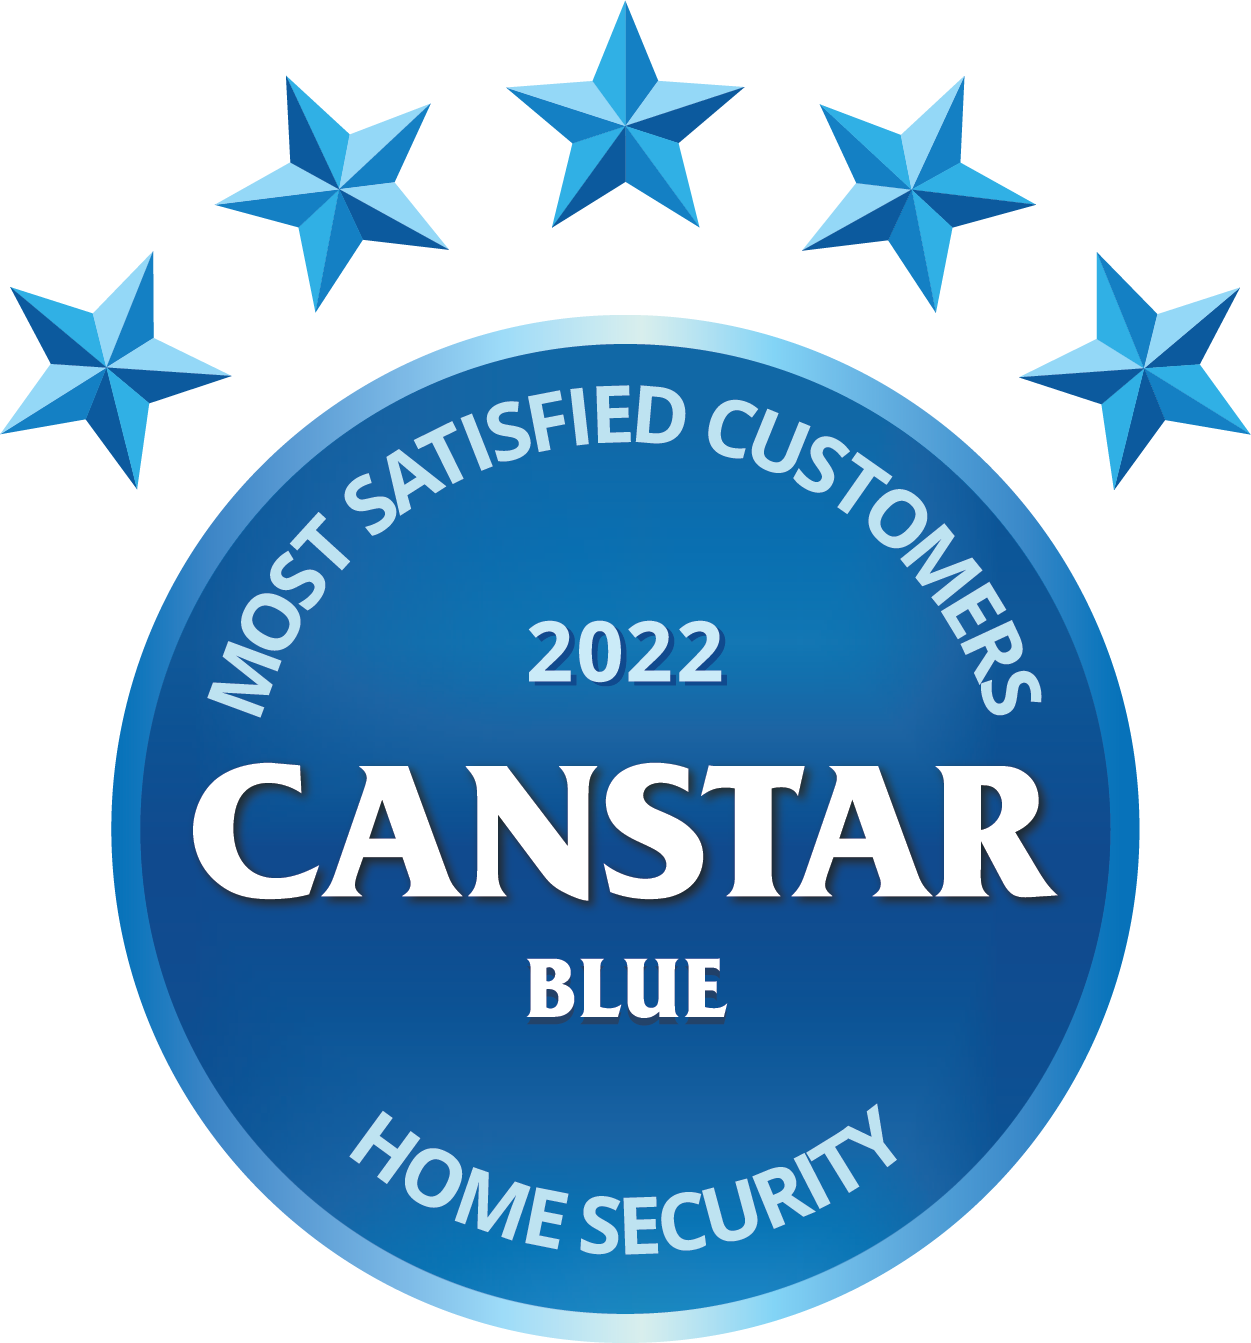 Eufy Home Security Range Wins Canstar Blue Award